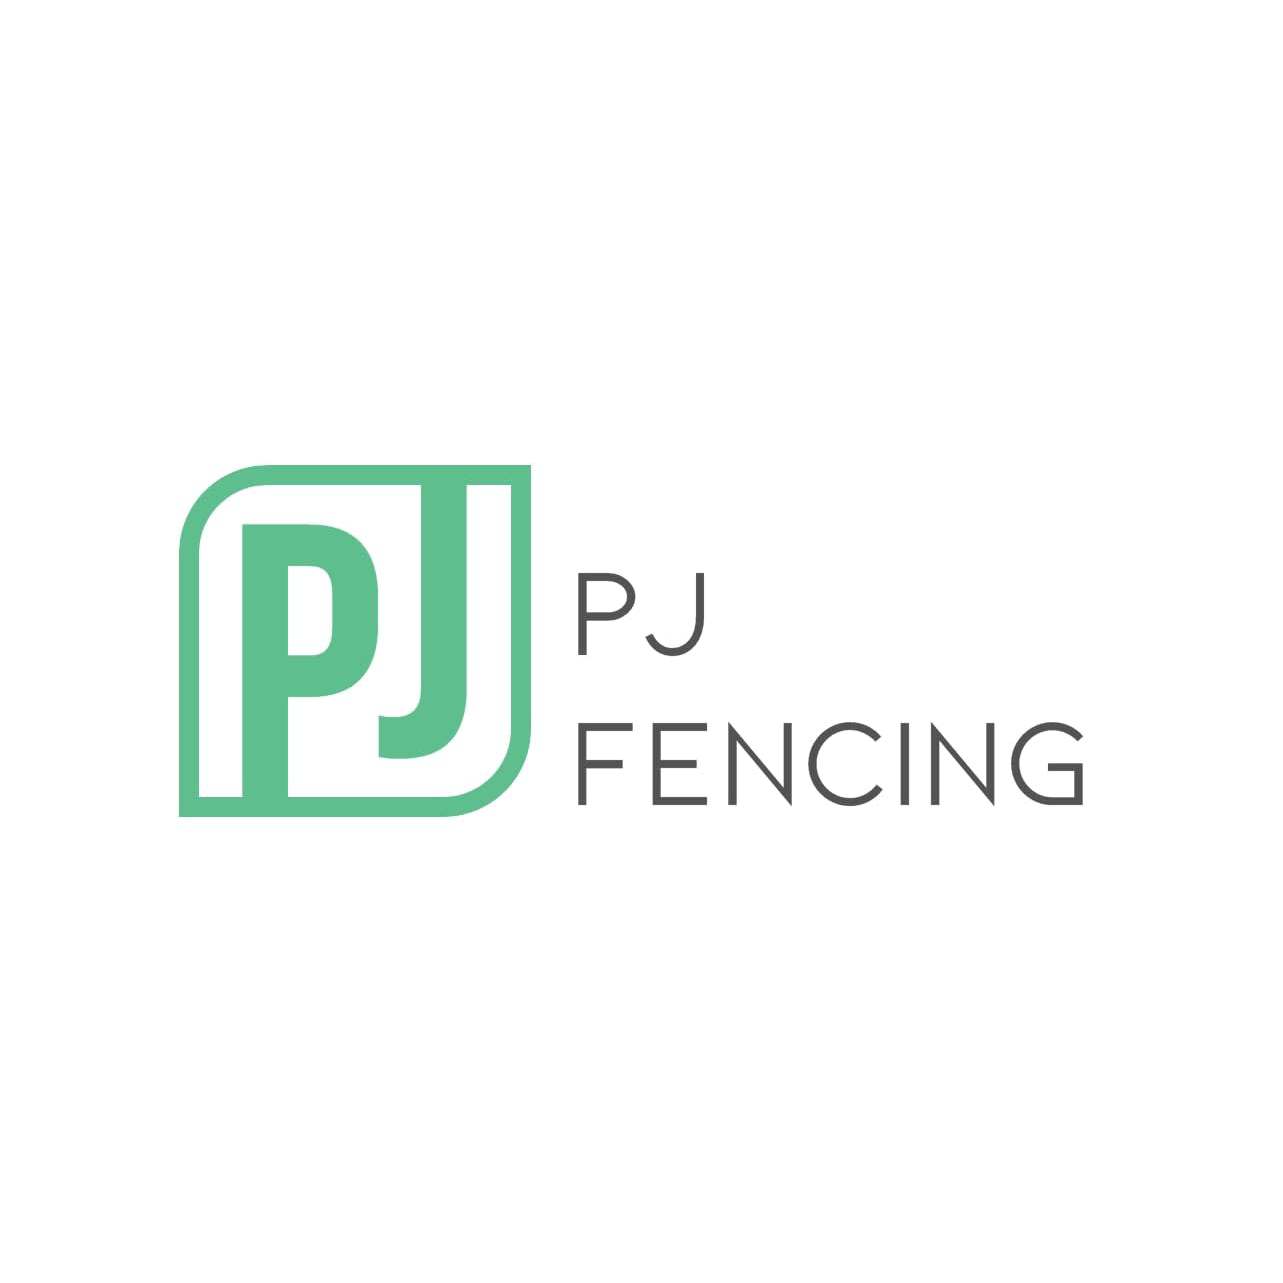 PJ Fencing - Stratford-Upon-Avon, Warwickshire CV37 7LG - 07725 717235 | ShowMeLocal.com